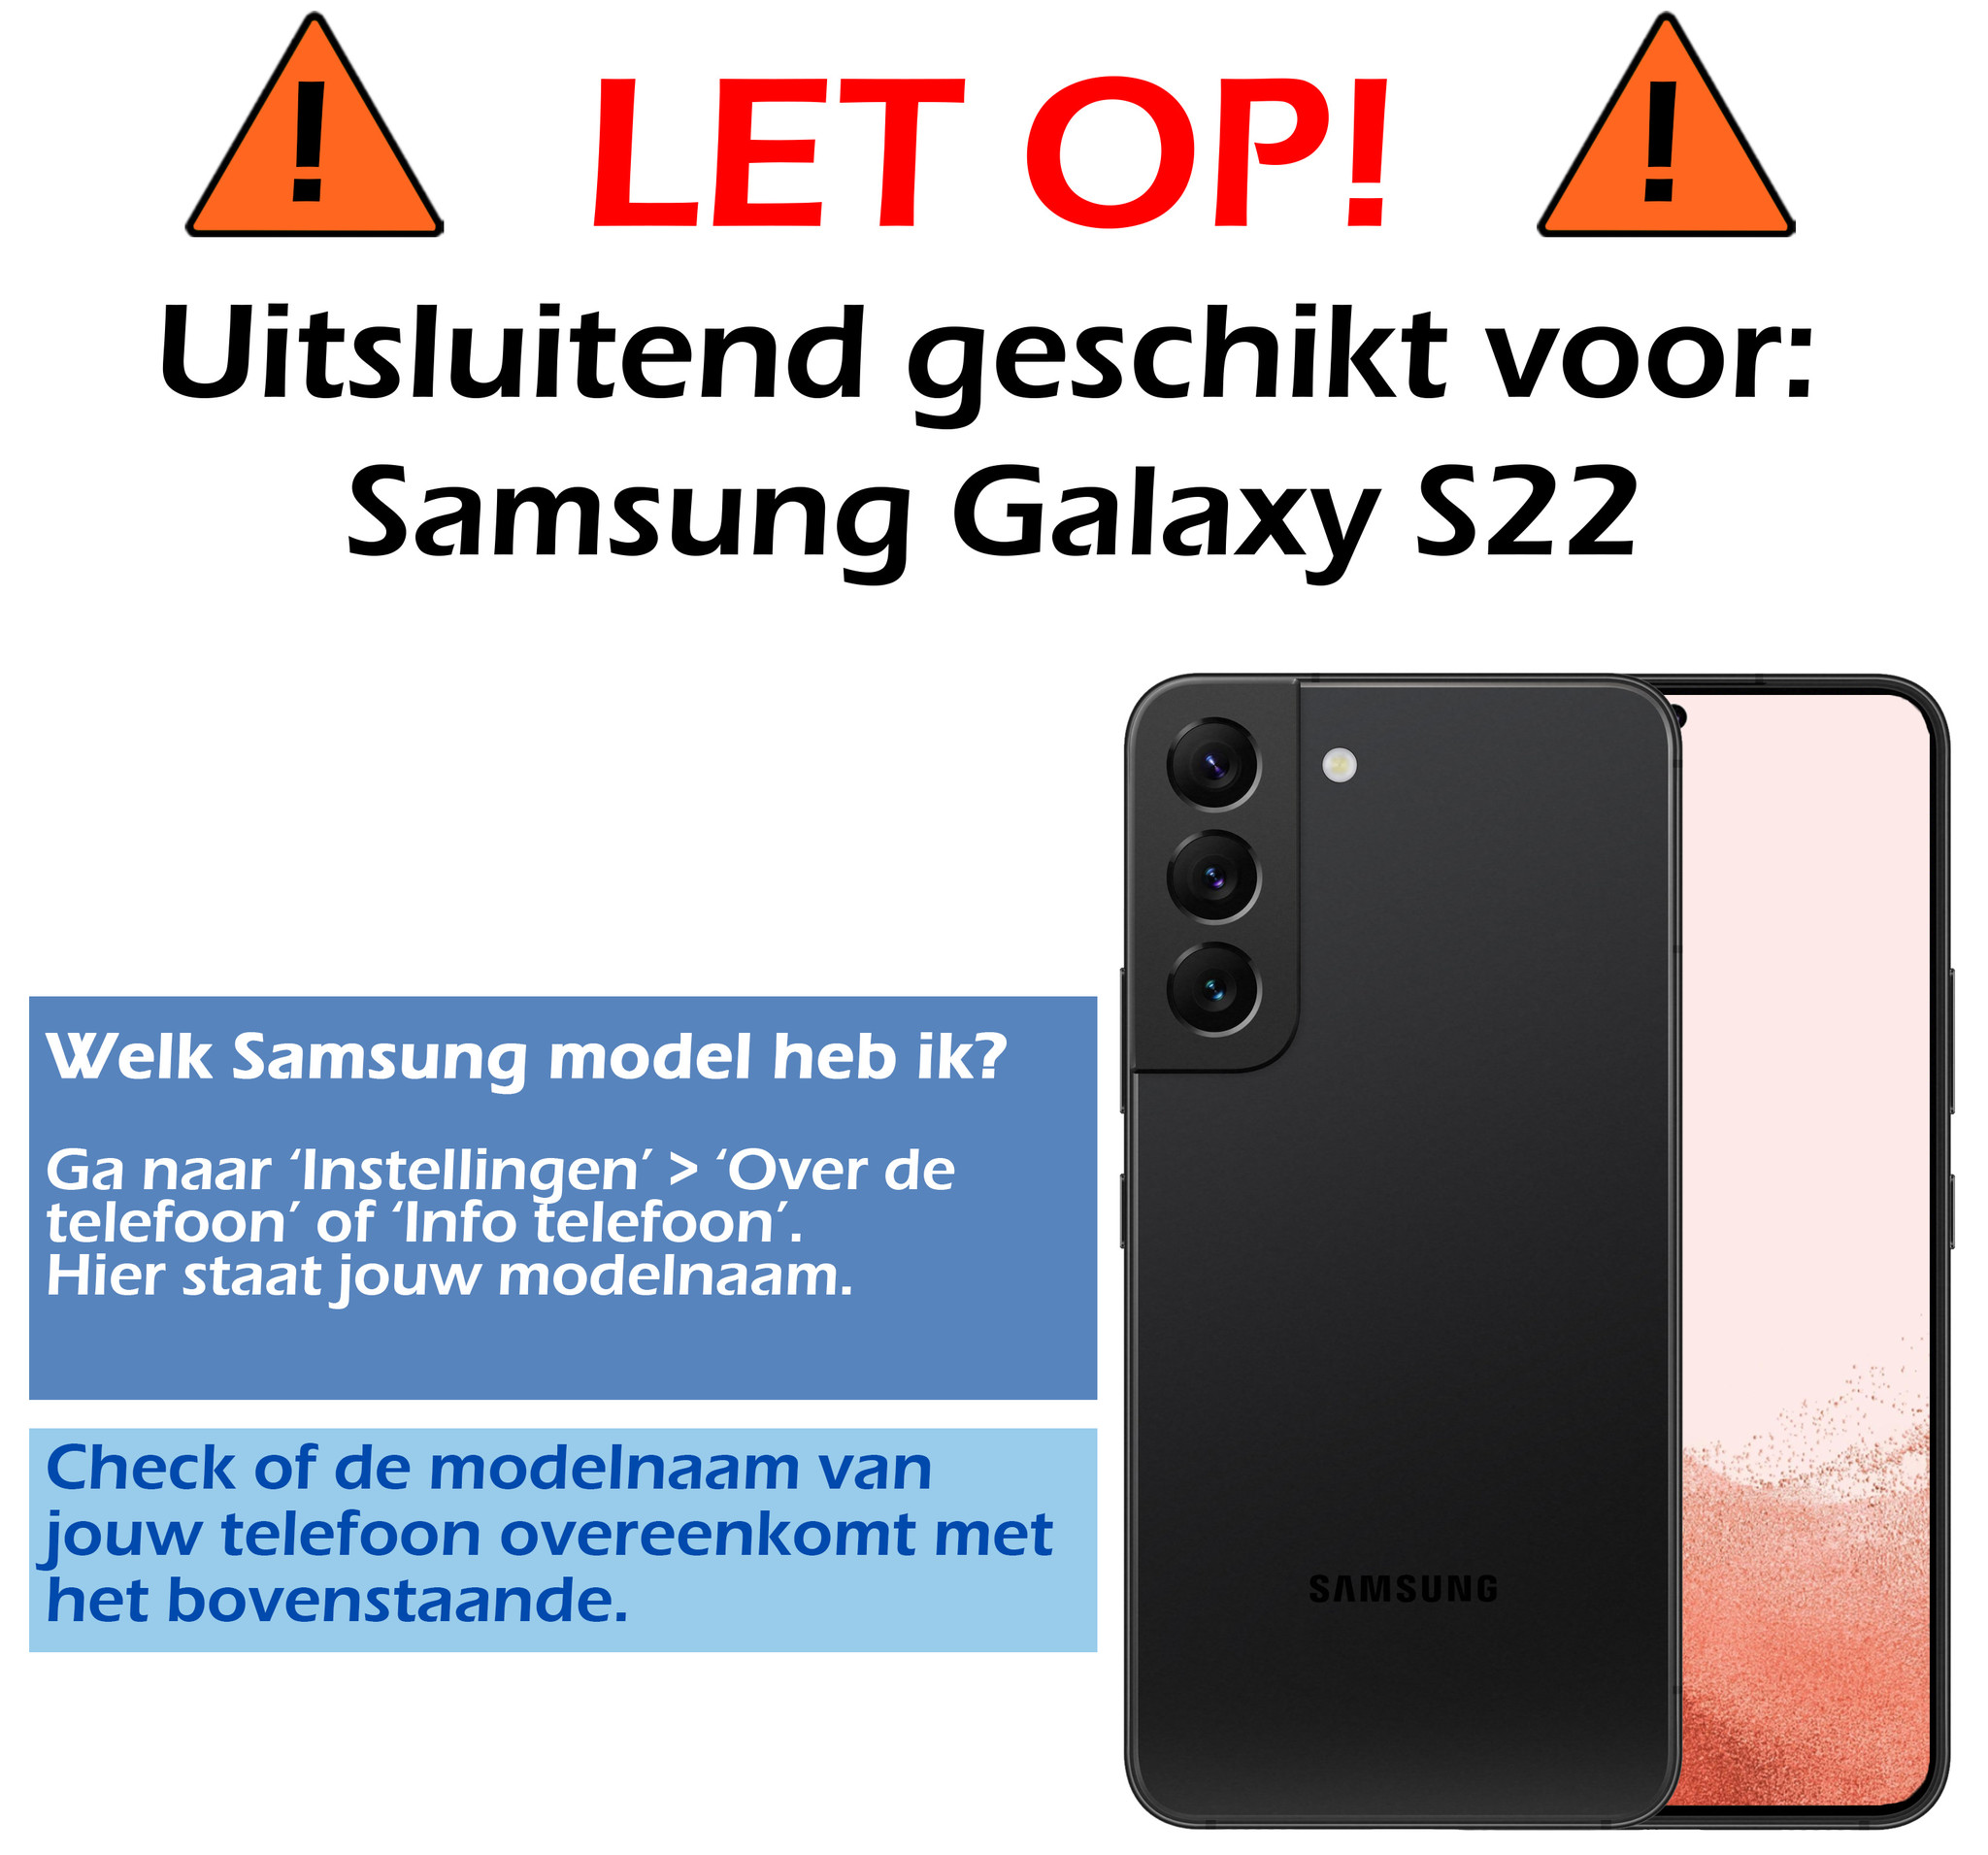 Nomfy Samsung Galaxy S22 Screenprotector Bescherm Glas Full Cover - Samsung S22 Screen Protector 3D Tempered Glass - 2x